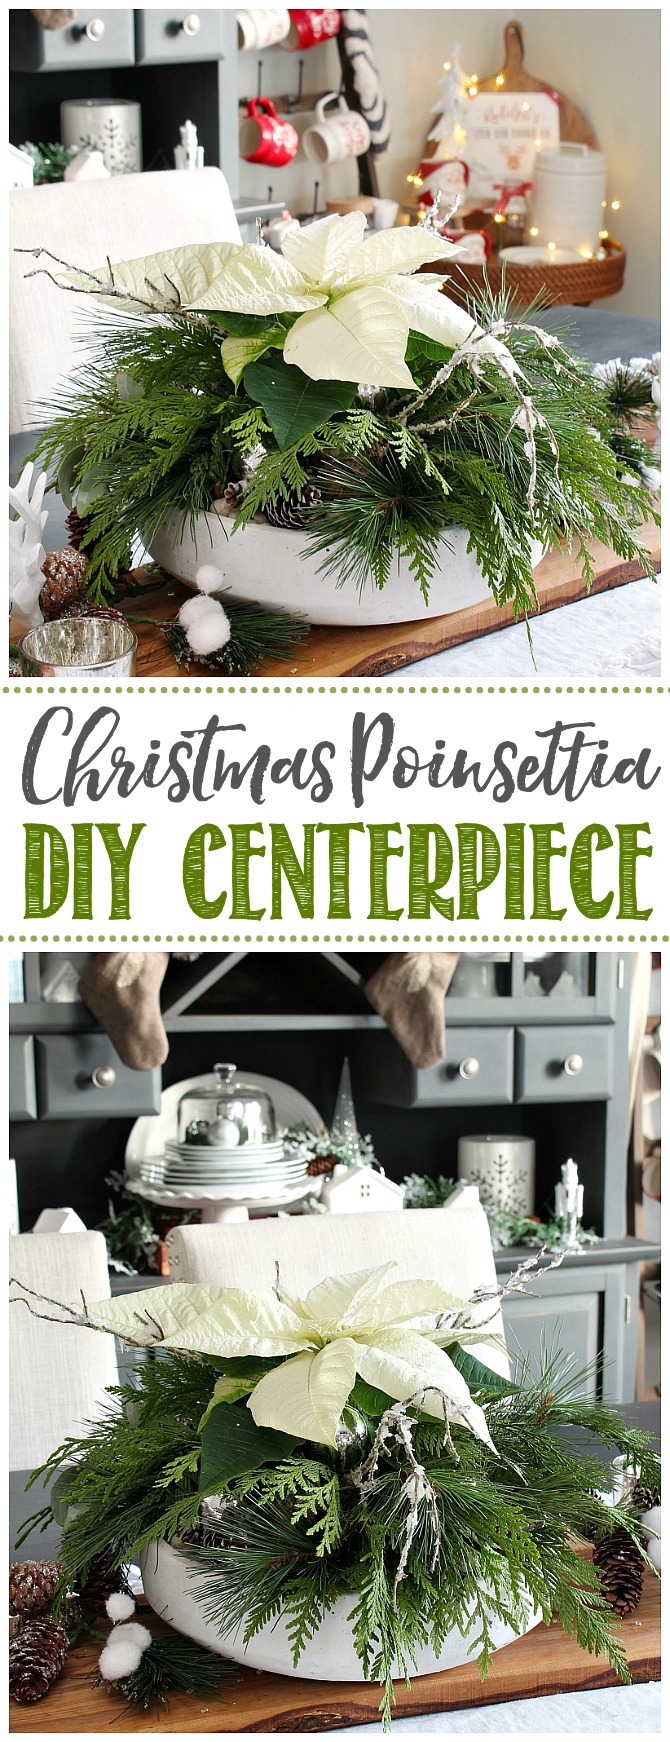 Simple DIY Christmas centerpiece idea with a poinsettia and fresh greenery.